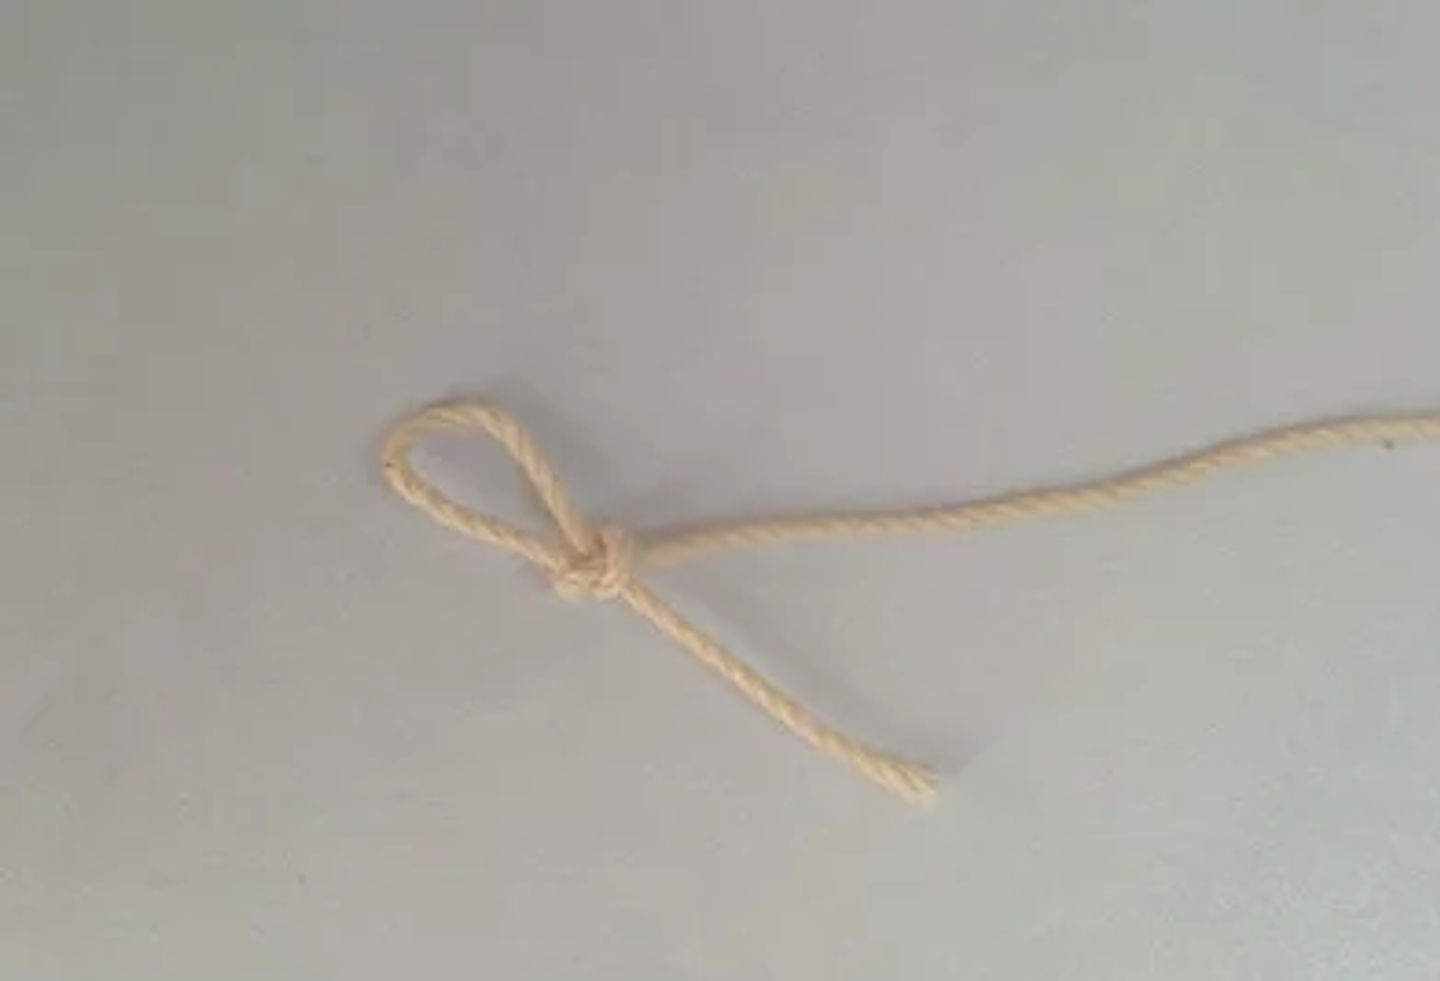 Loop in thread